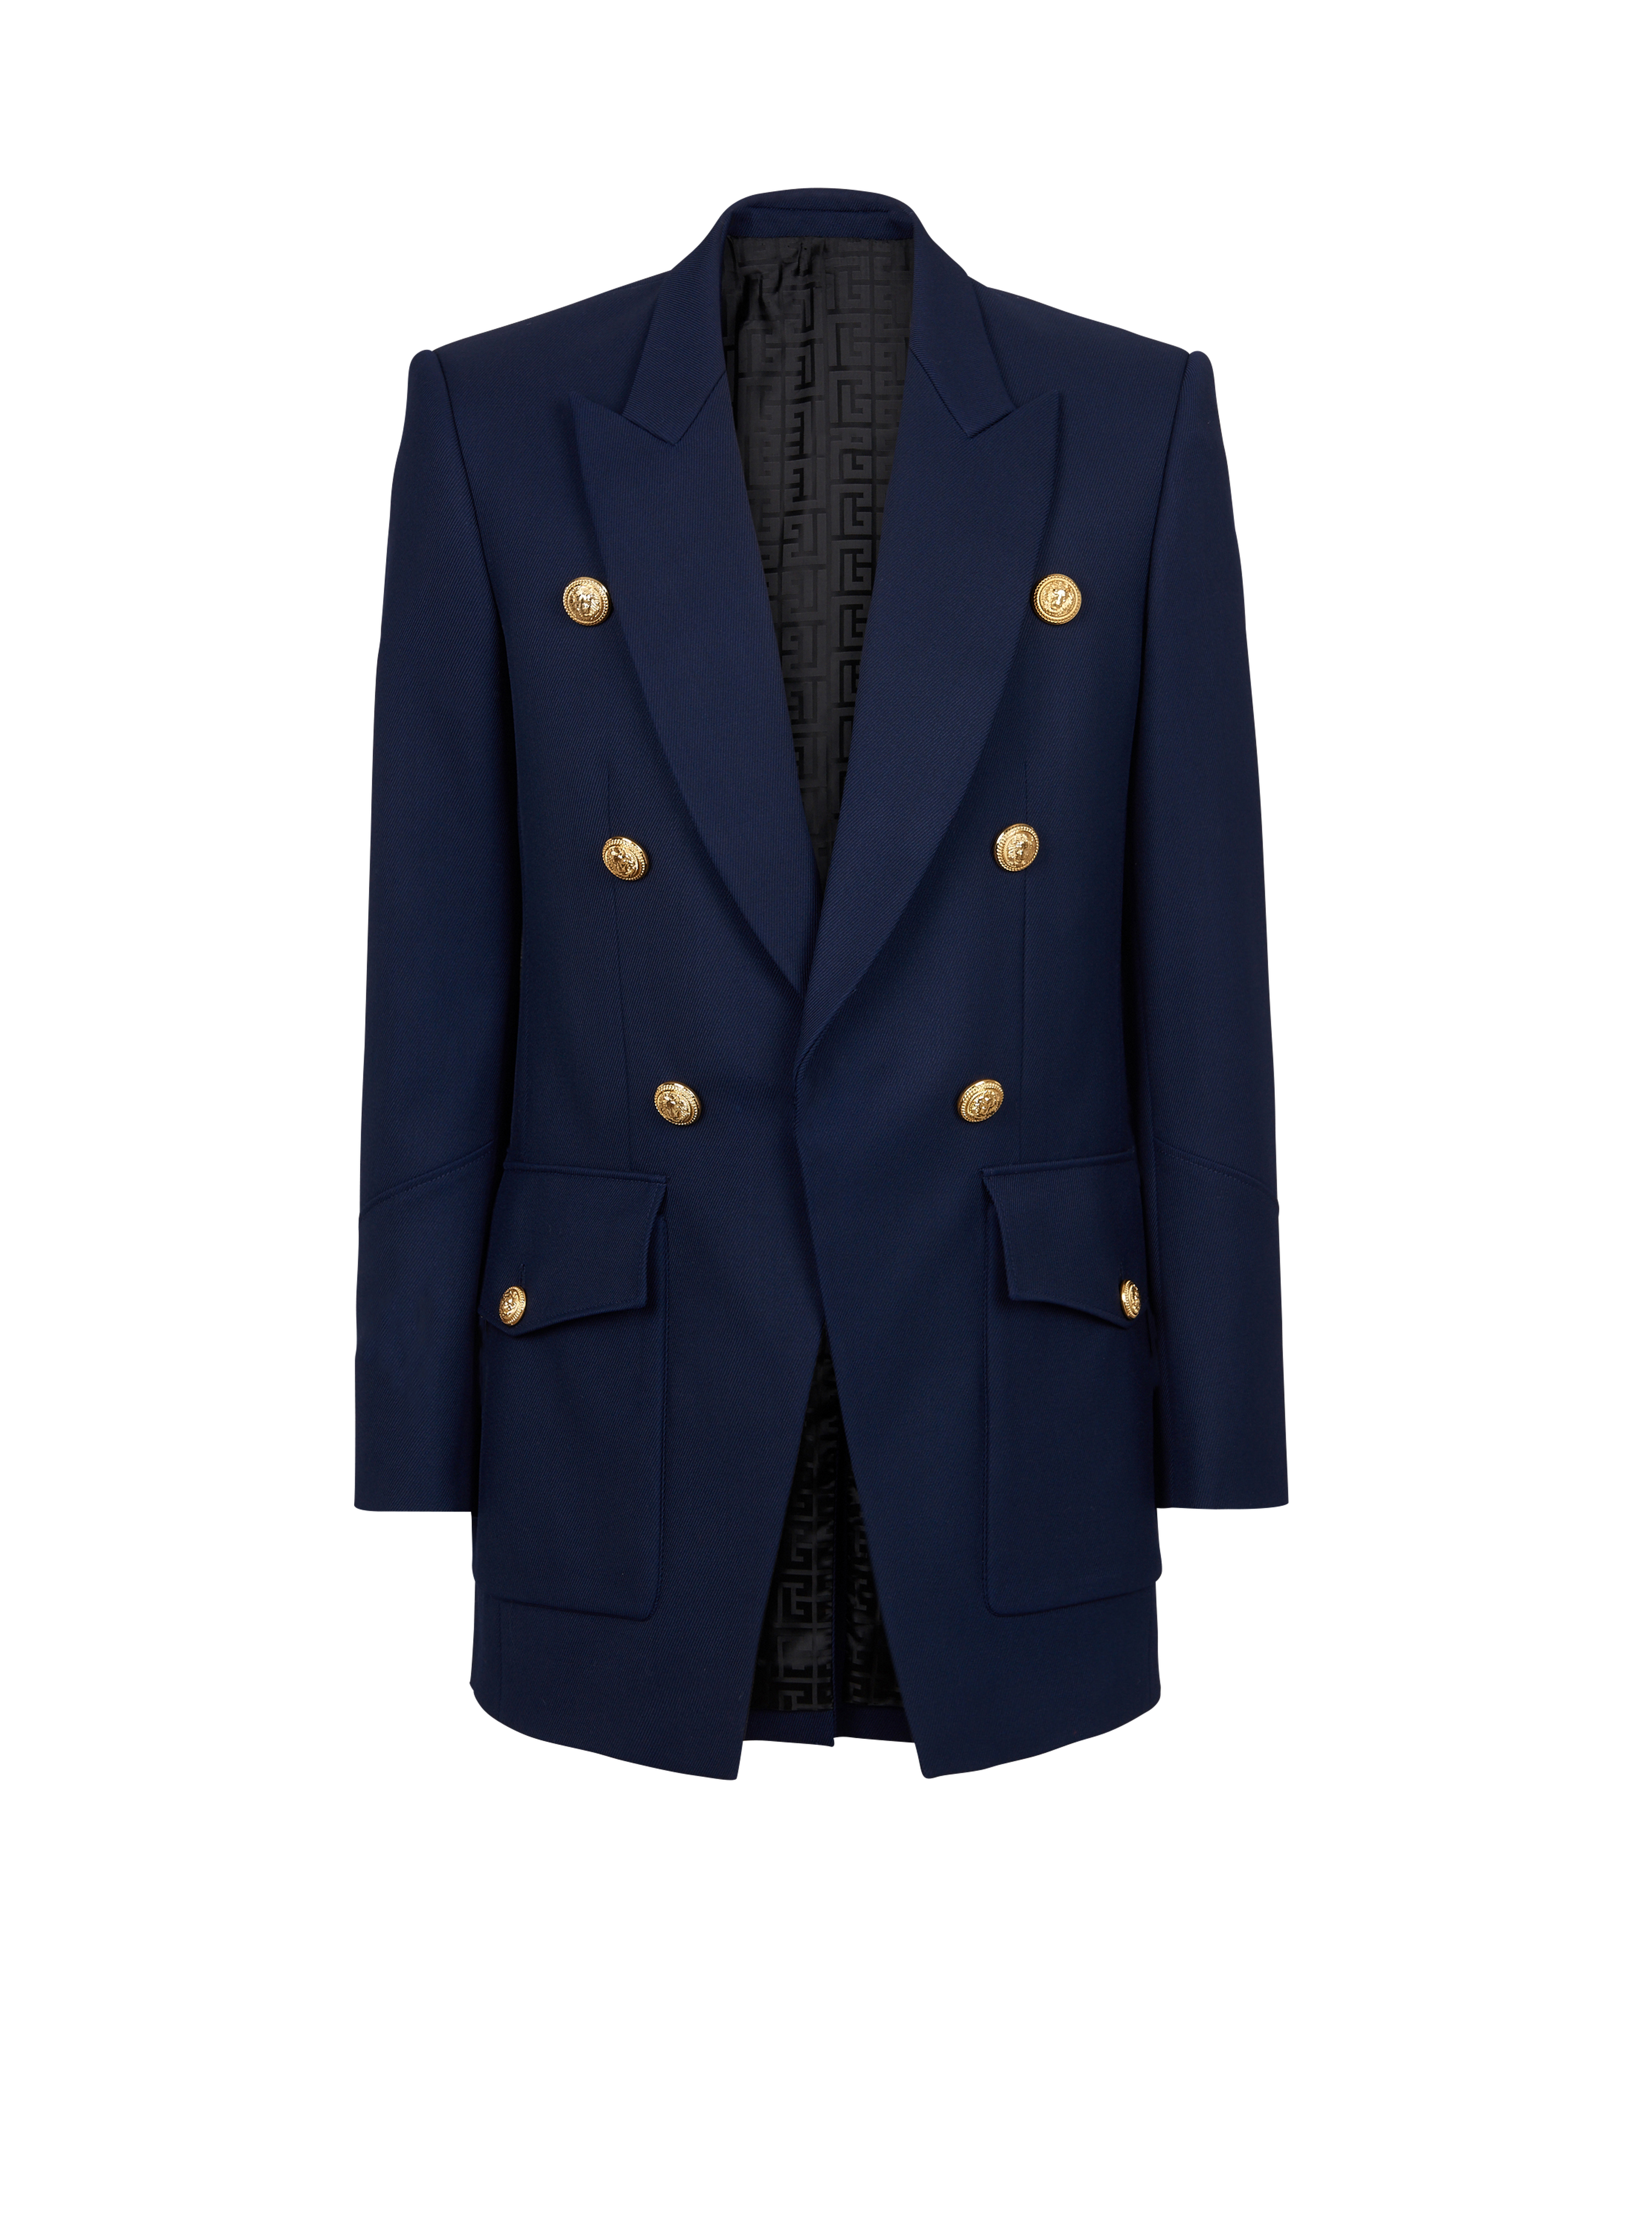 Six-button twill blazer with monogram lining , navy